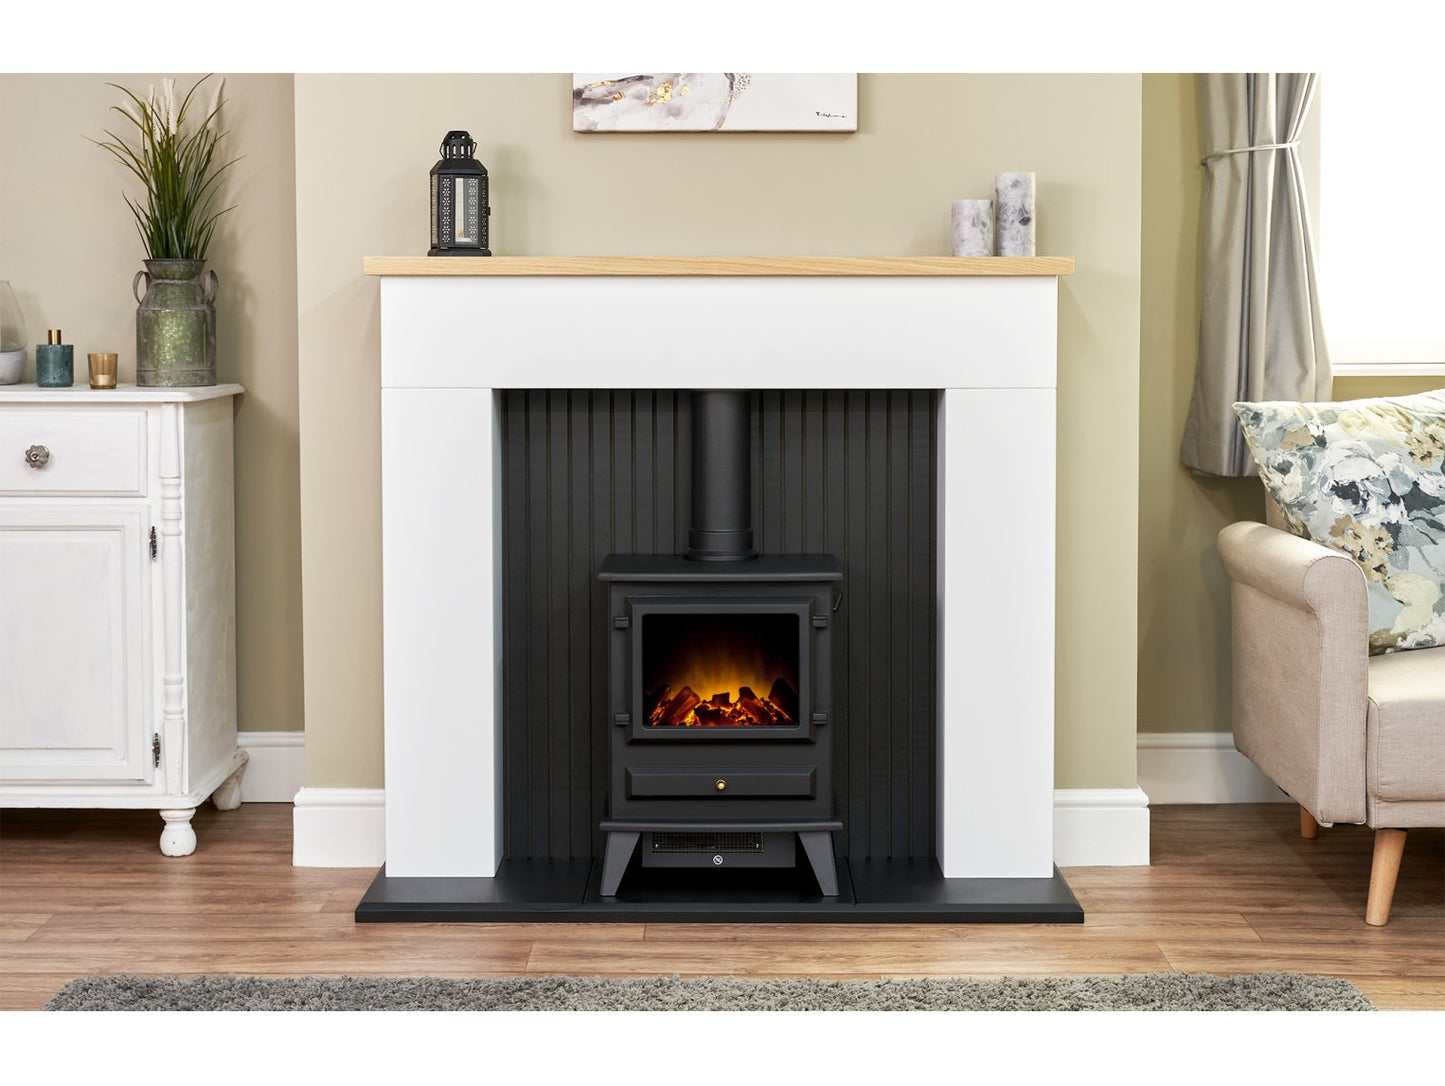 Adam Innsbruck Stove Fireplace Pure White + Hudson Electric Stove Black, 48"